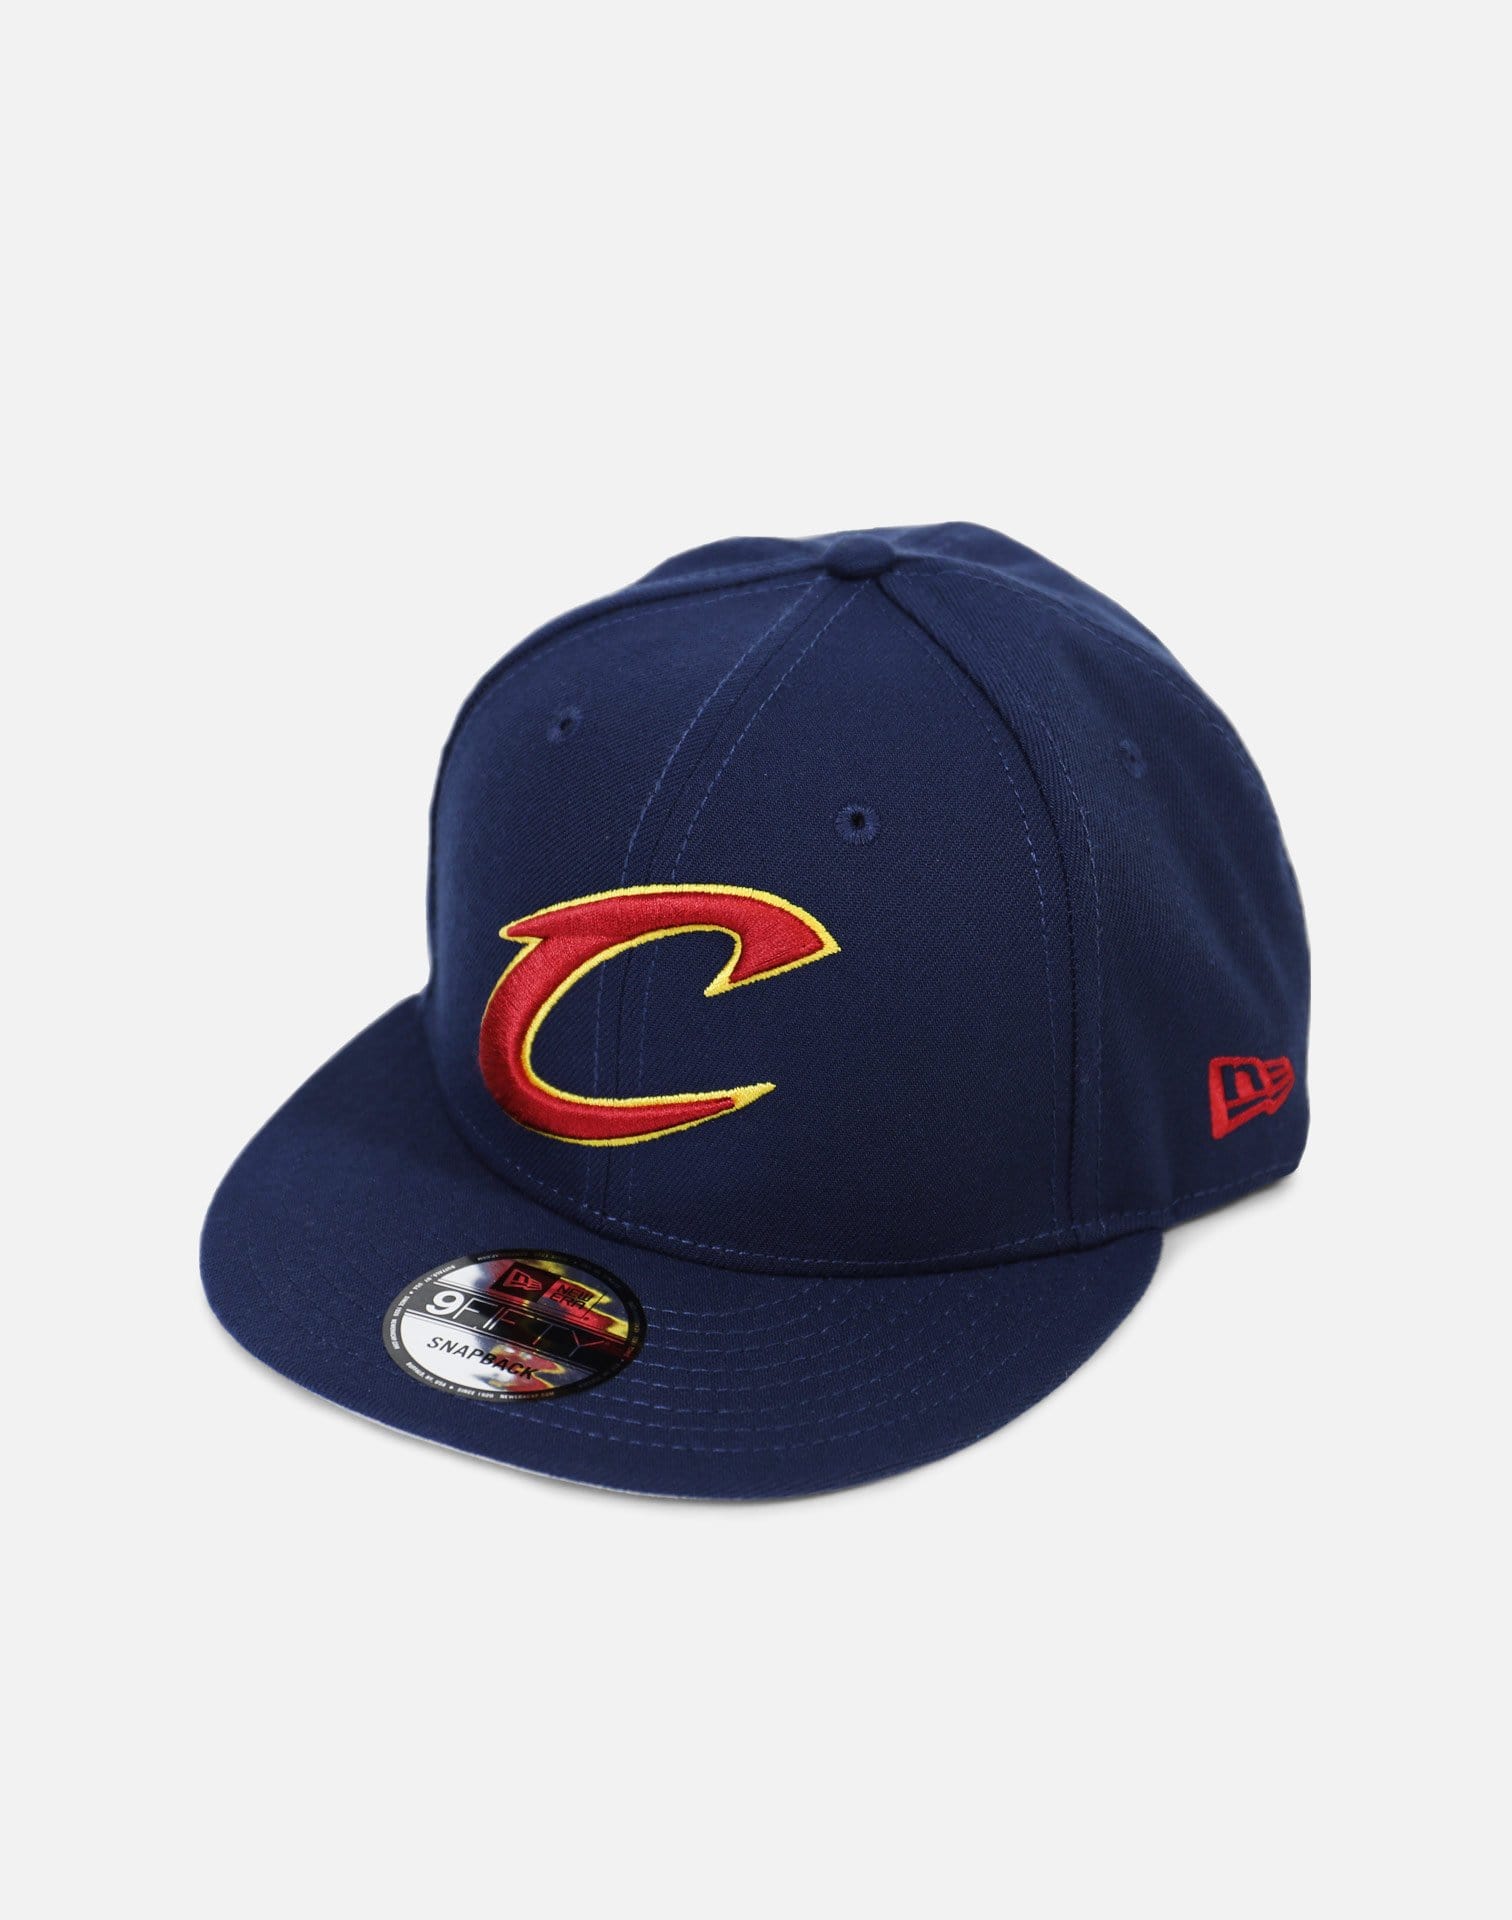 New Era 9Fifty Cleveland Cavaliers Snapback Hat (Navy)